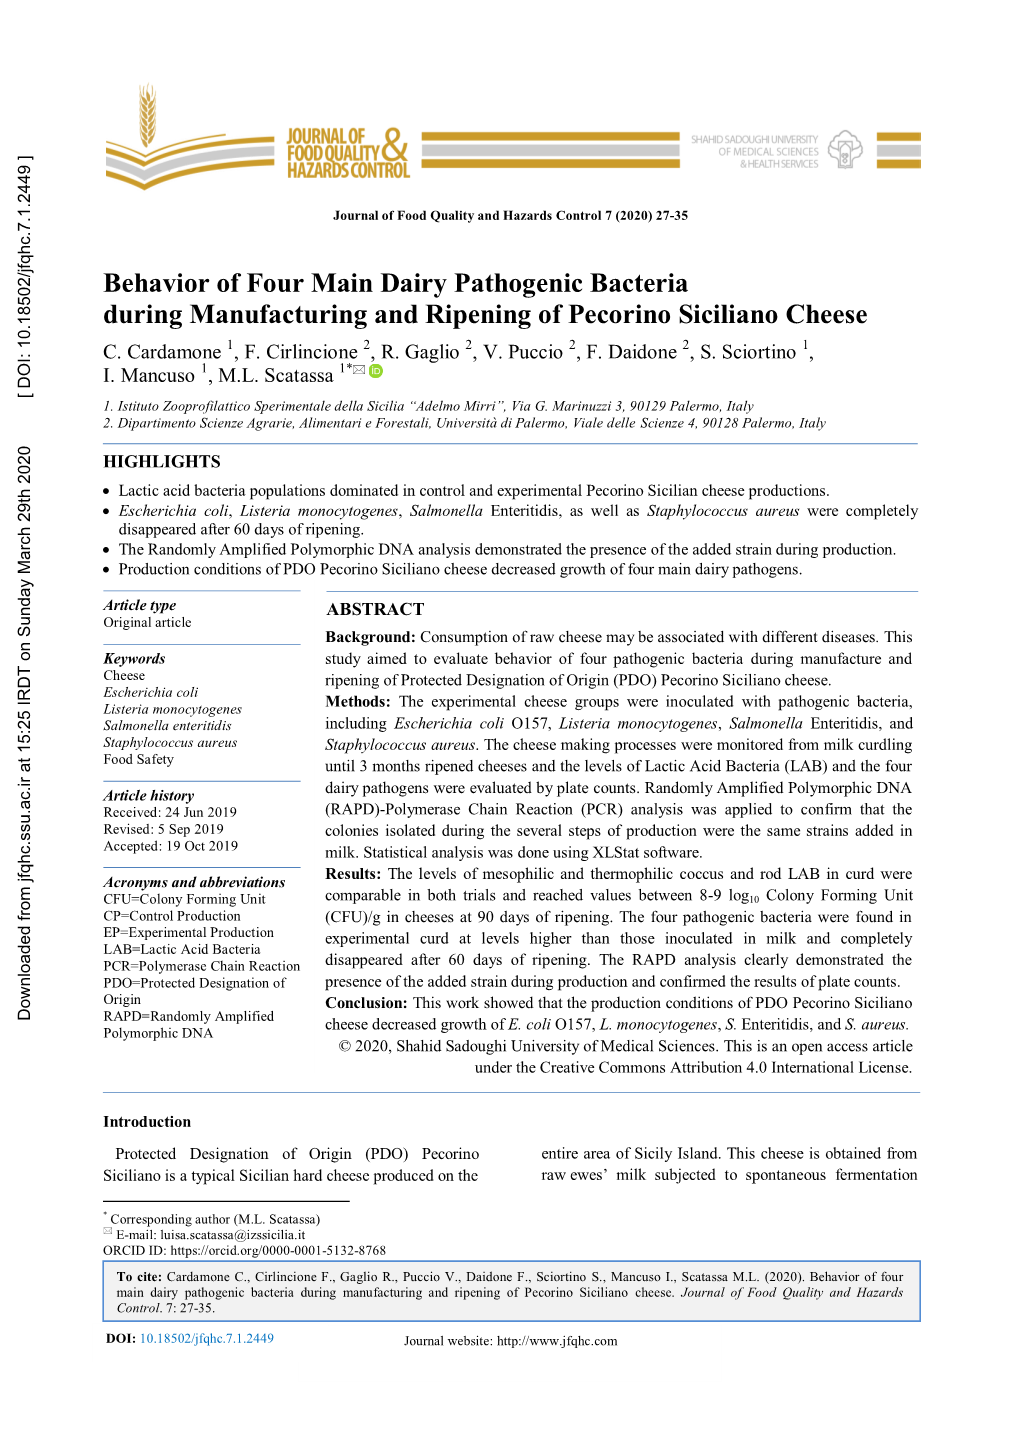 Behavior of Four Main Dairy Pathogenic Bacteria During Manufacturing and Ripening of Pecorino Siciliano Cheese C